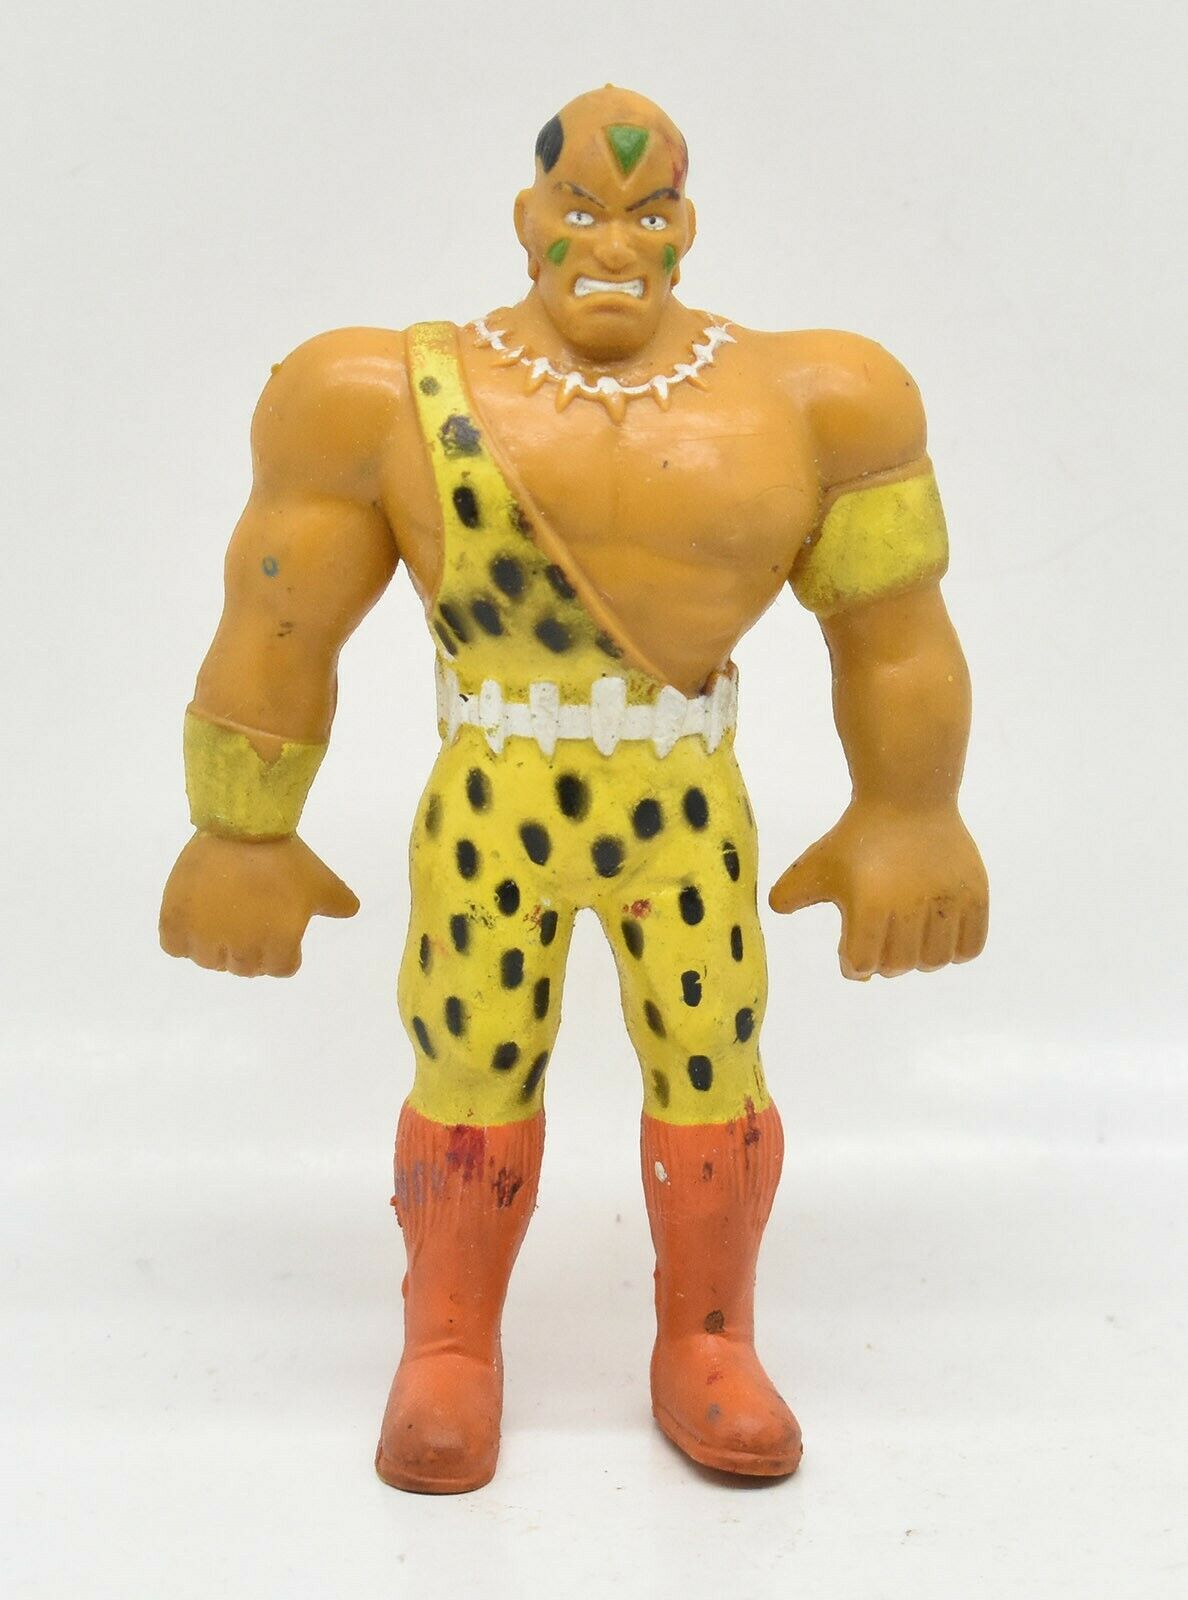 1985 IWA Star-Studded Wrestling Bendable Action Figures King Kongo